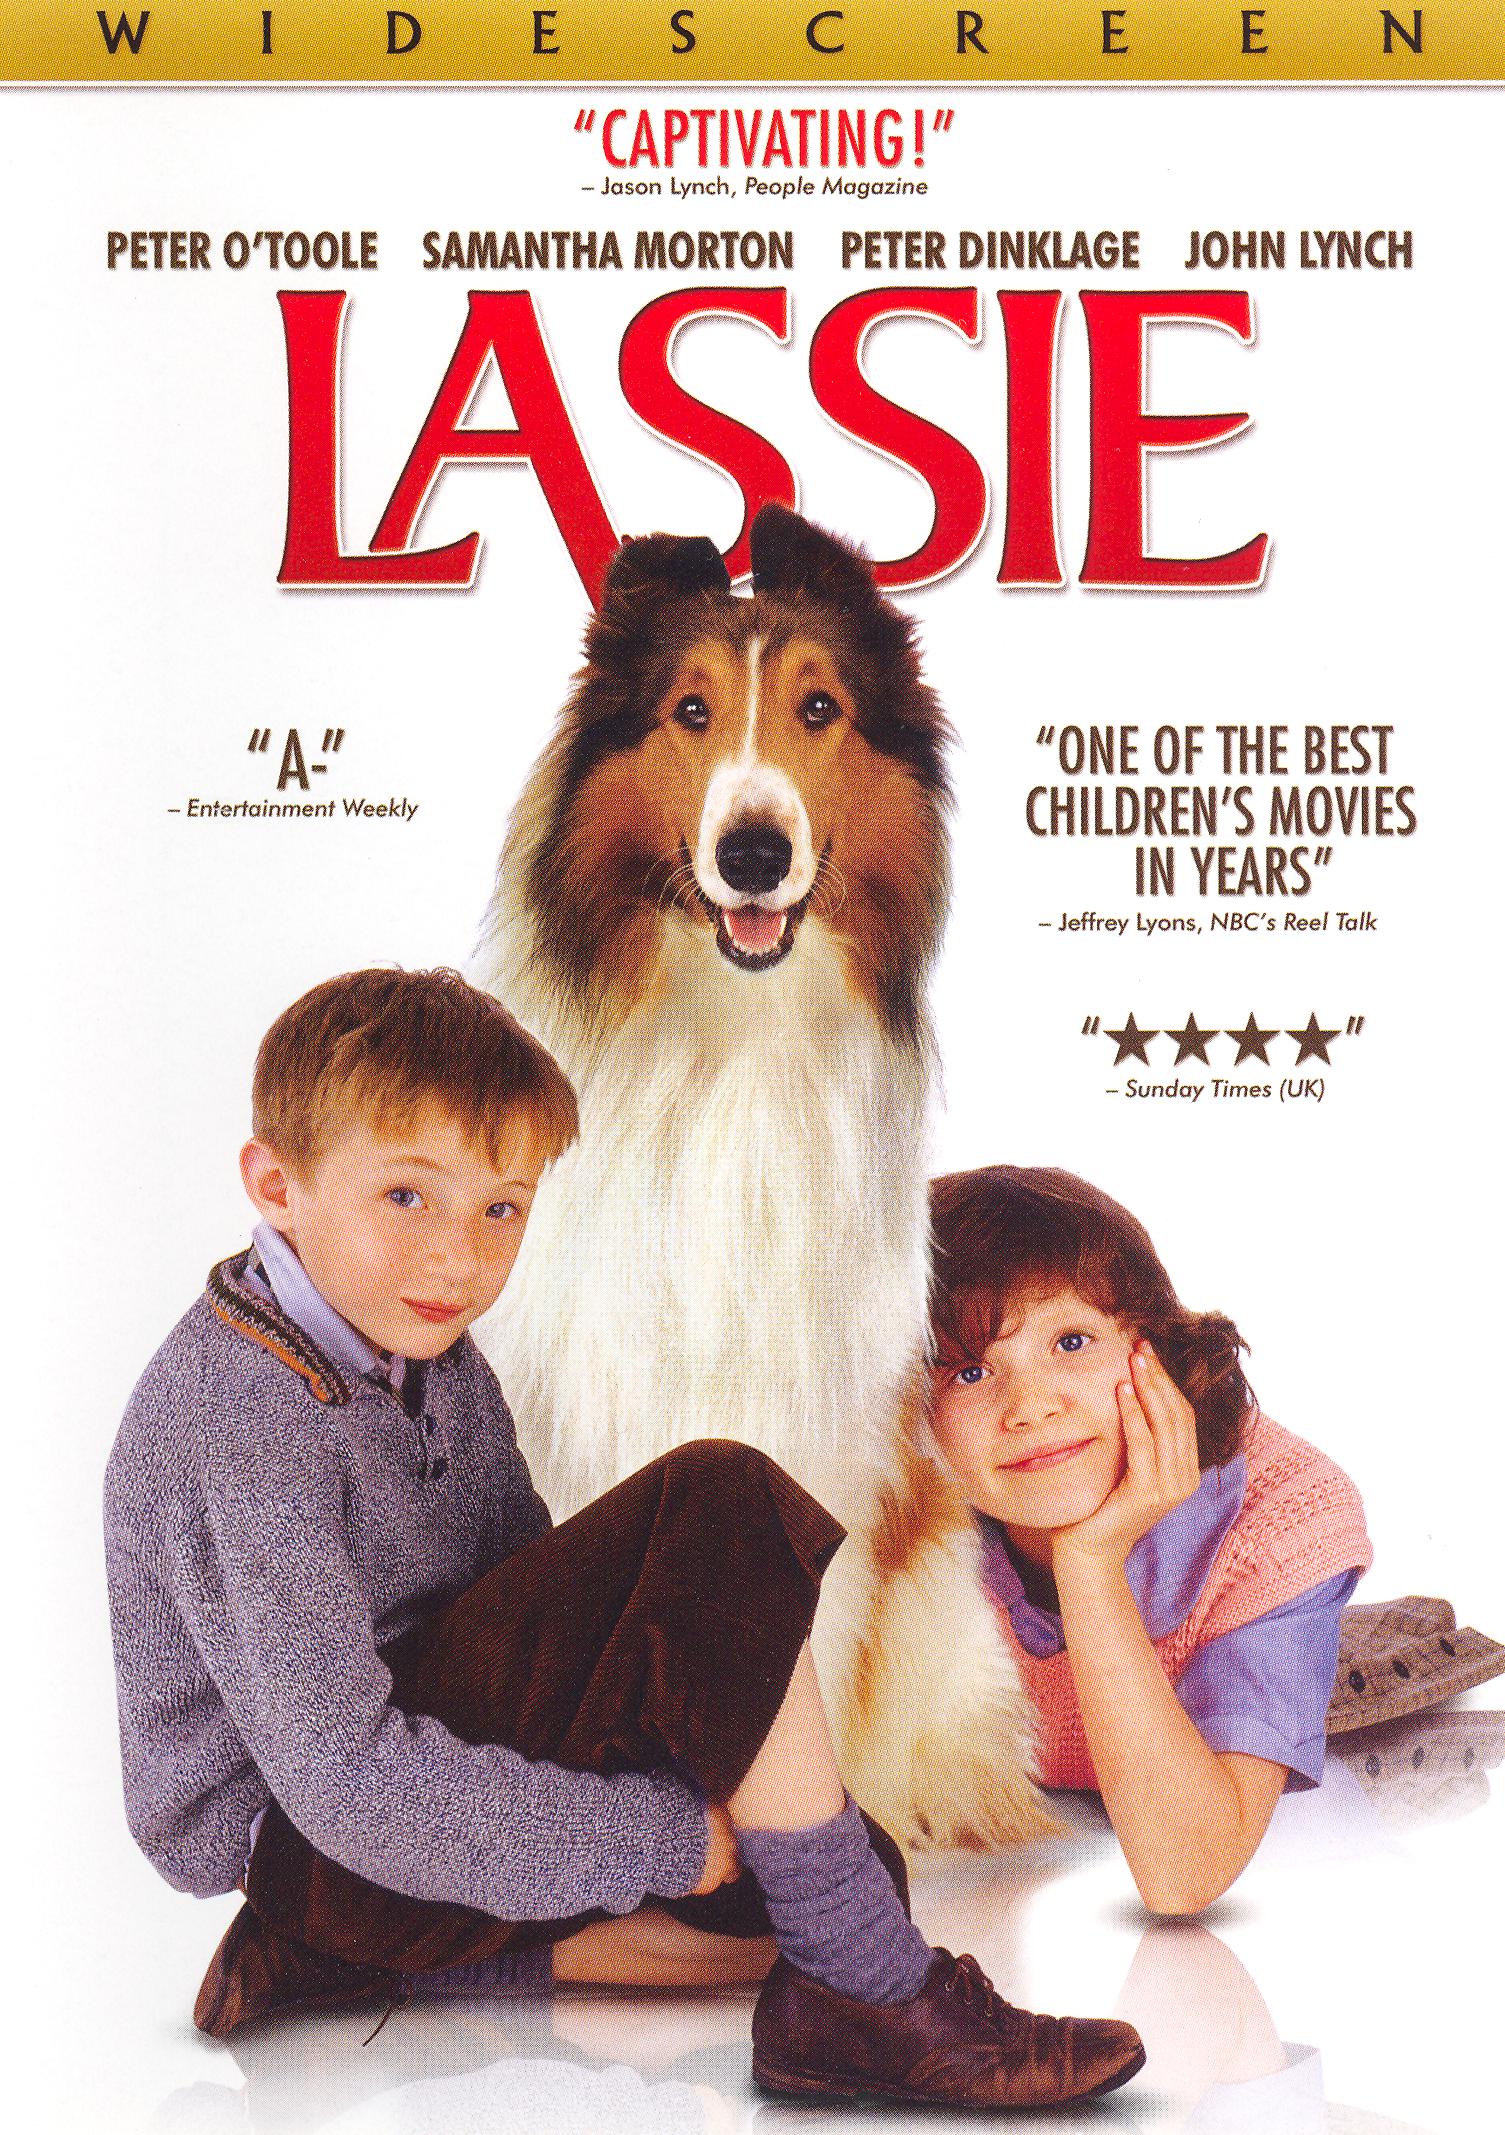 Best Buy Lassie Dvd 2005 